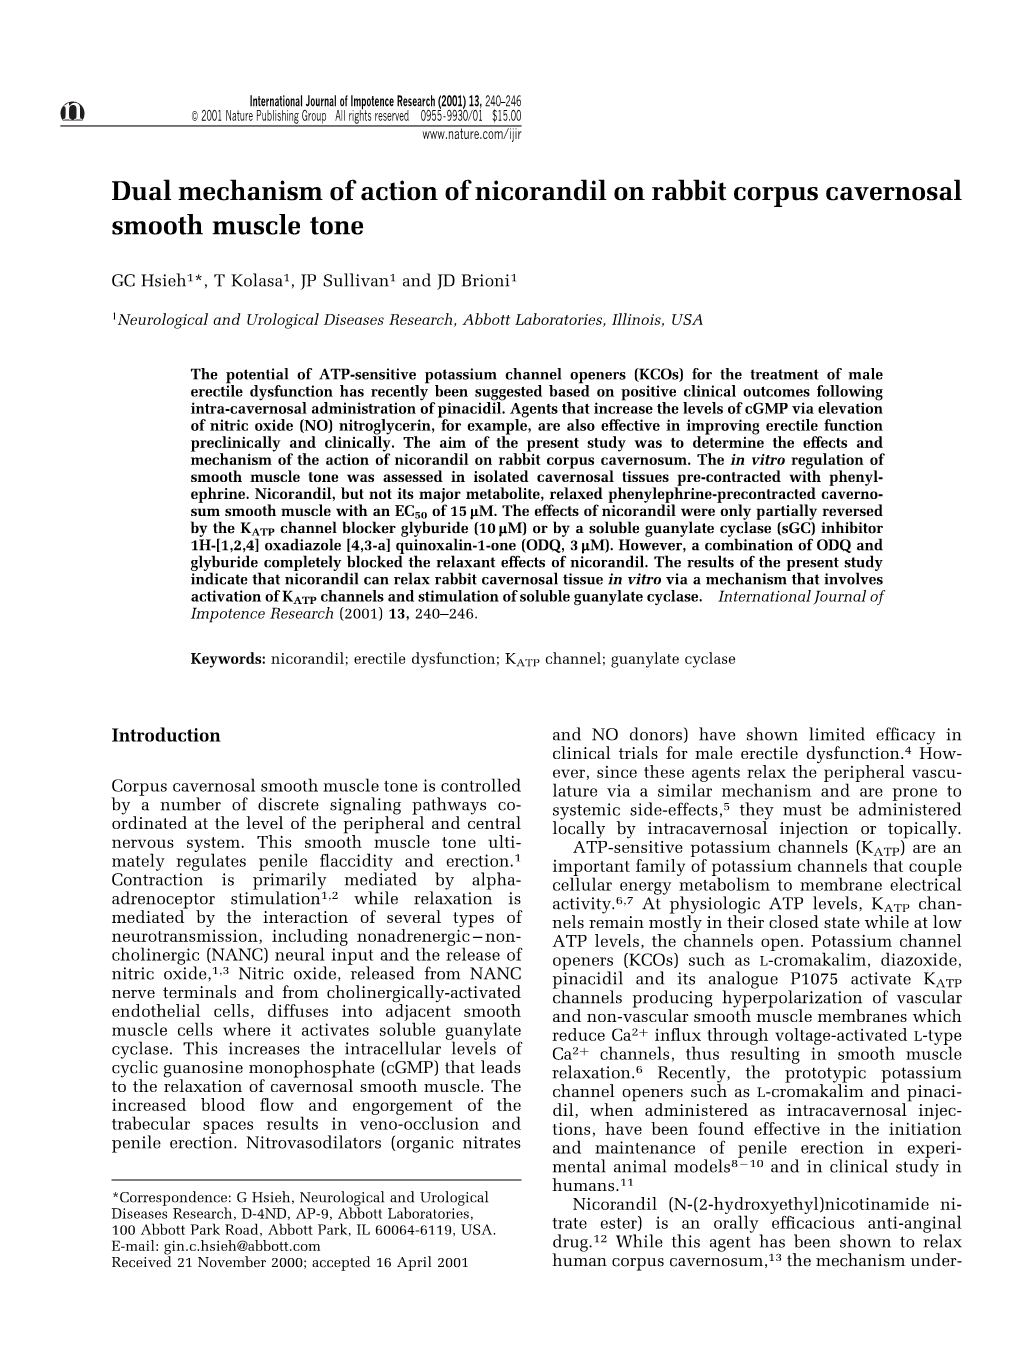 Dual Mechanism of Action of Nicorandil on Rabbit Corpus Cavernosal Smooth Muscle Tone